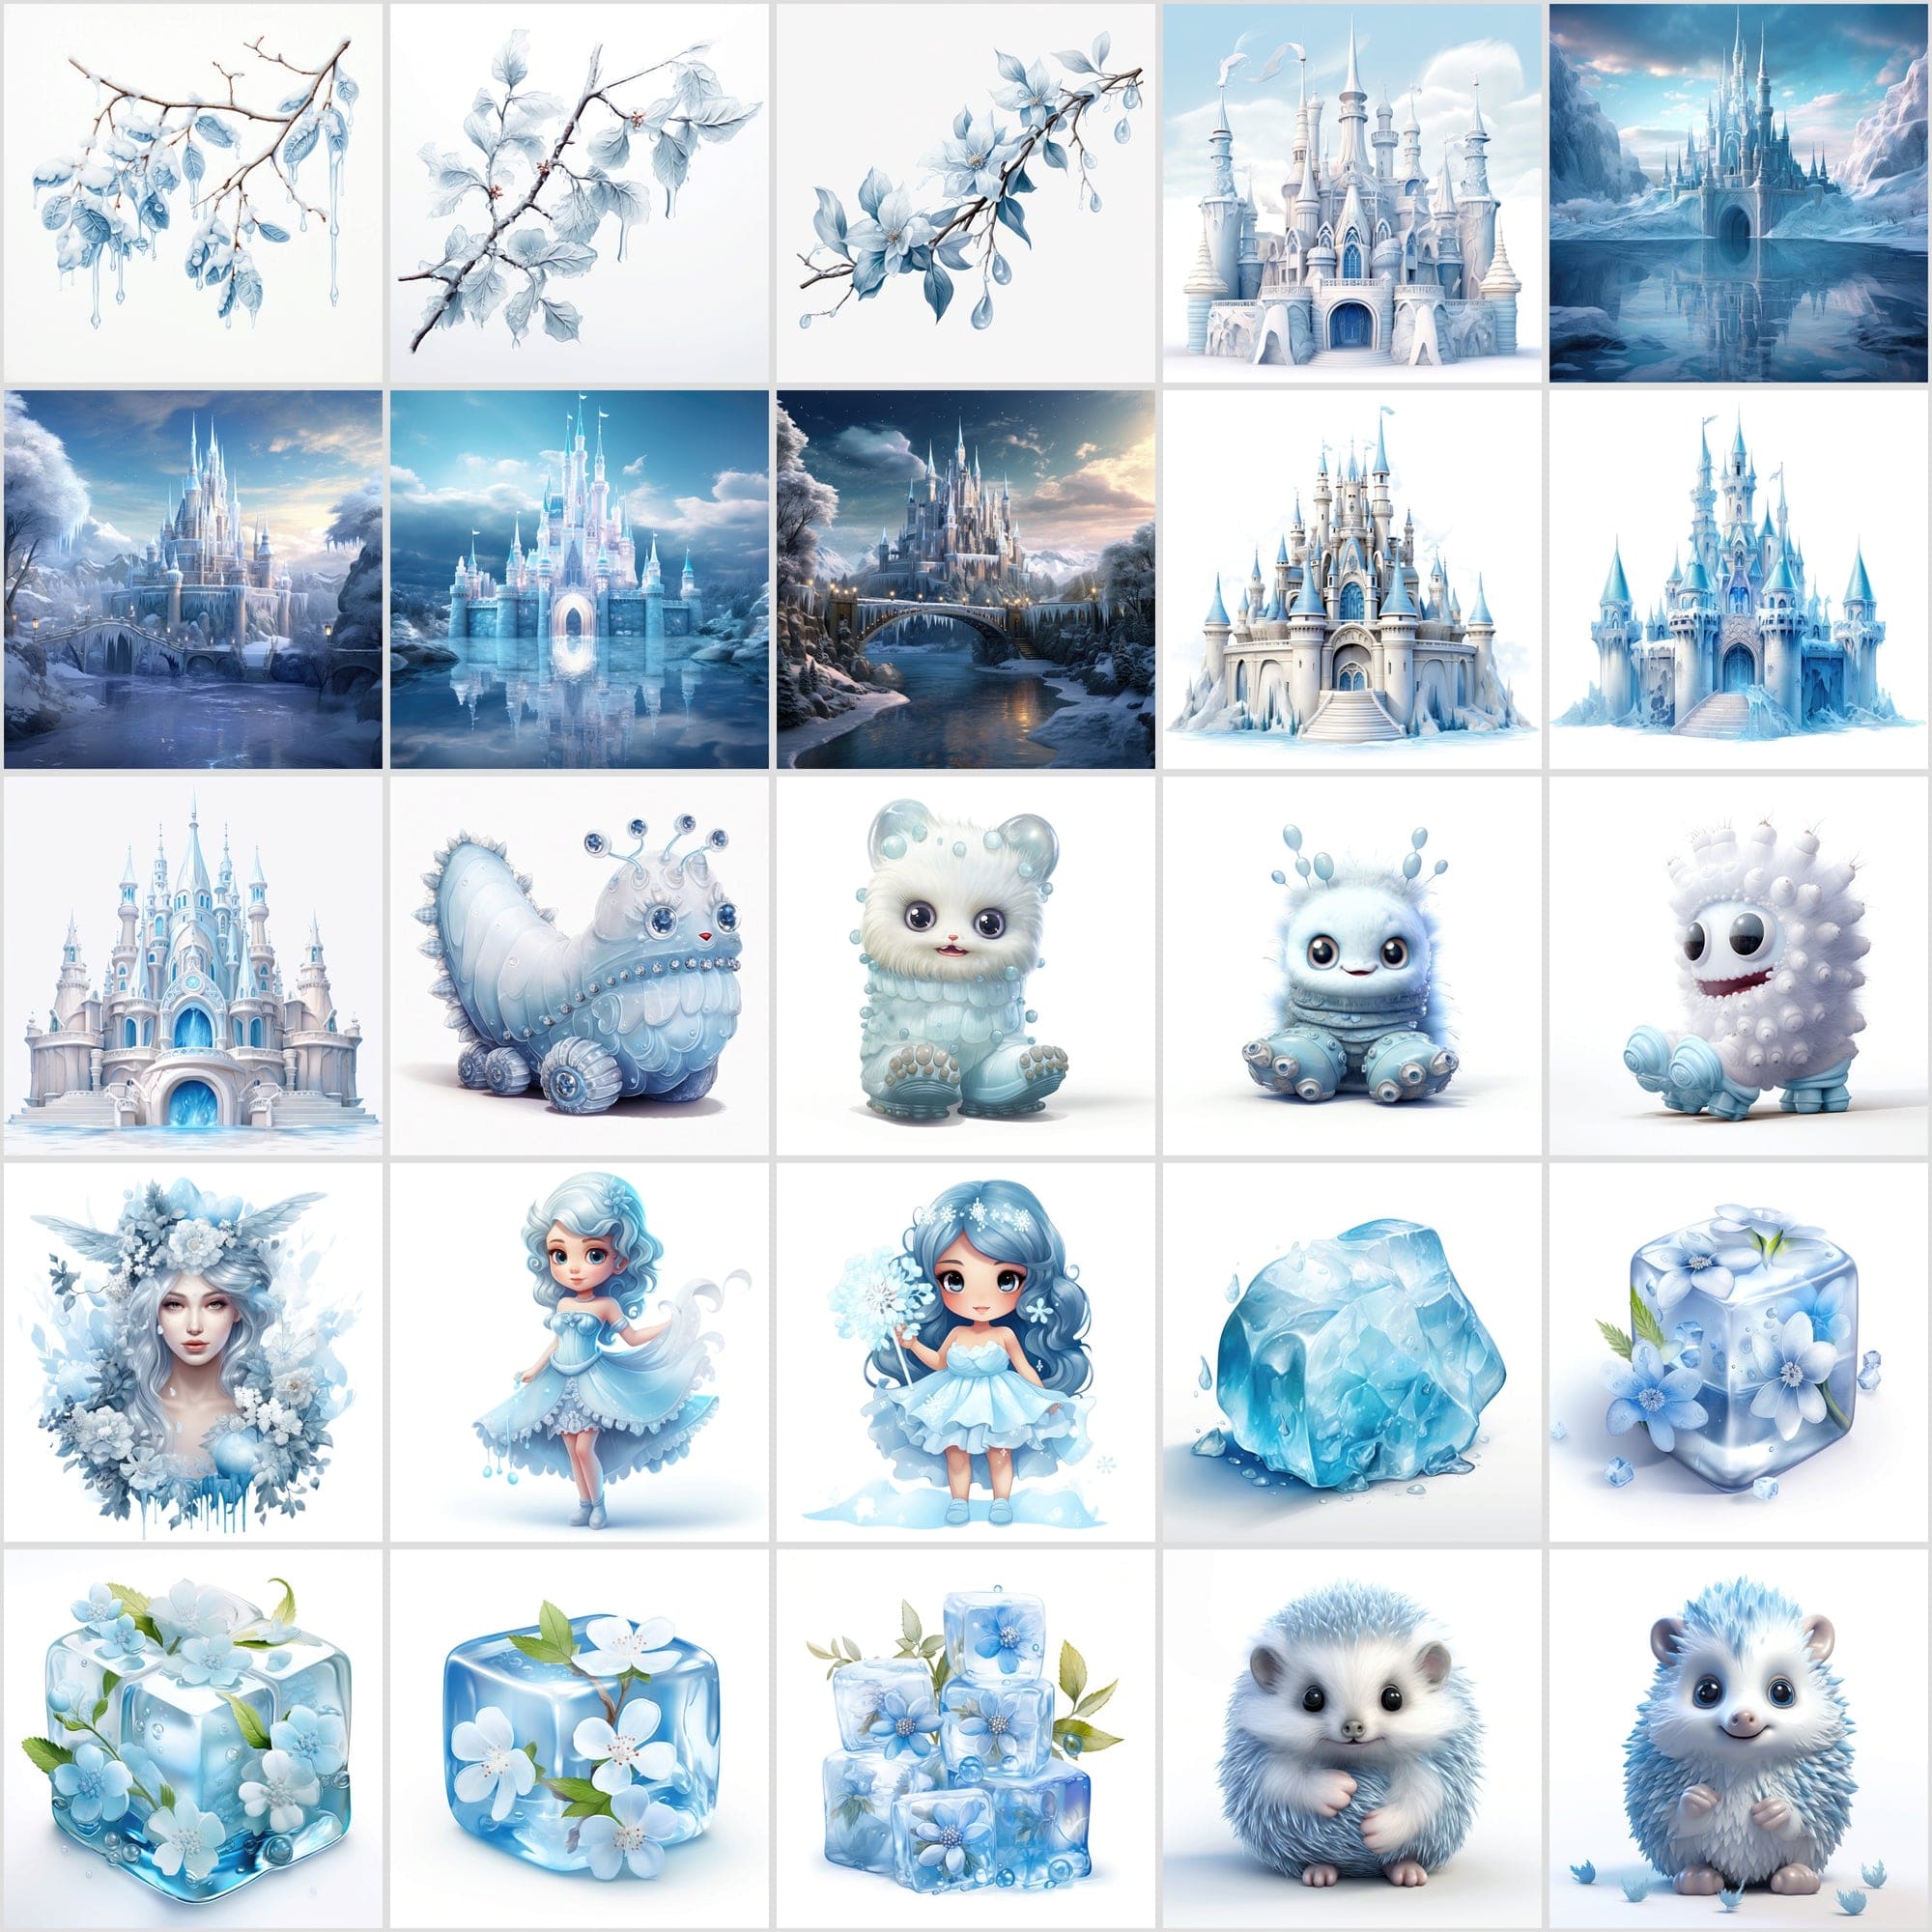 Blue-Themed Christmas Illustrations - JPG & PNG, Commercial License, High-Resolution Digital Download Sumobundle